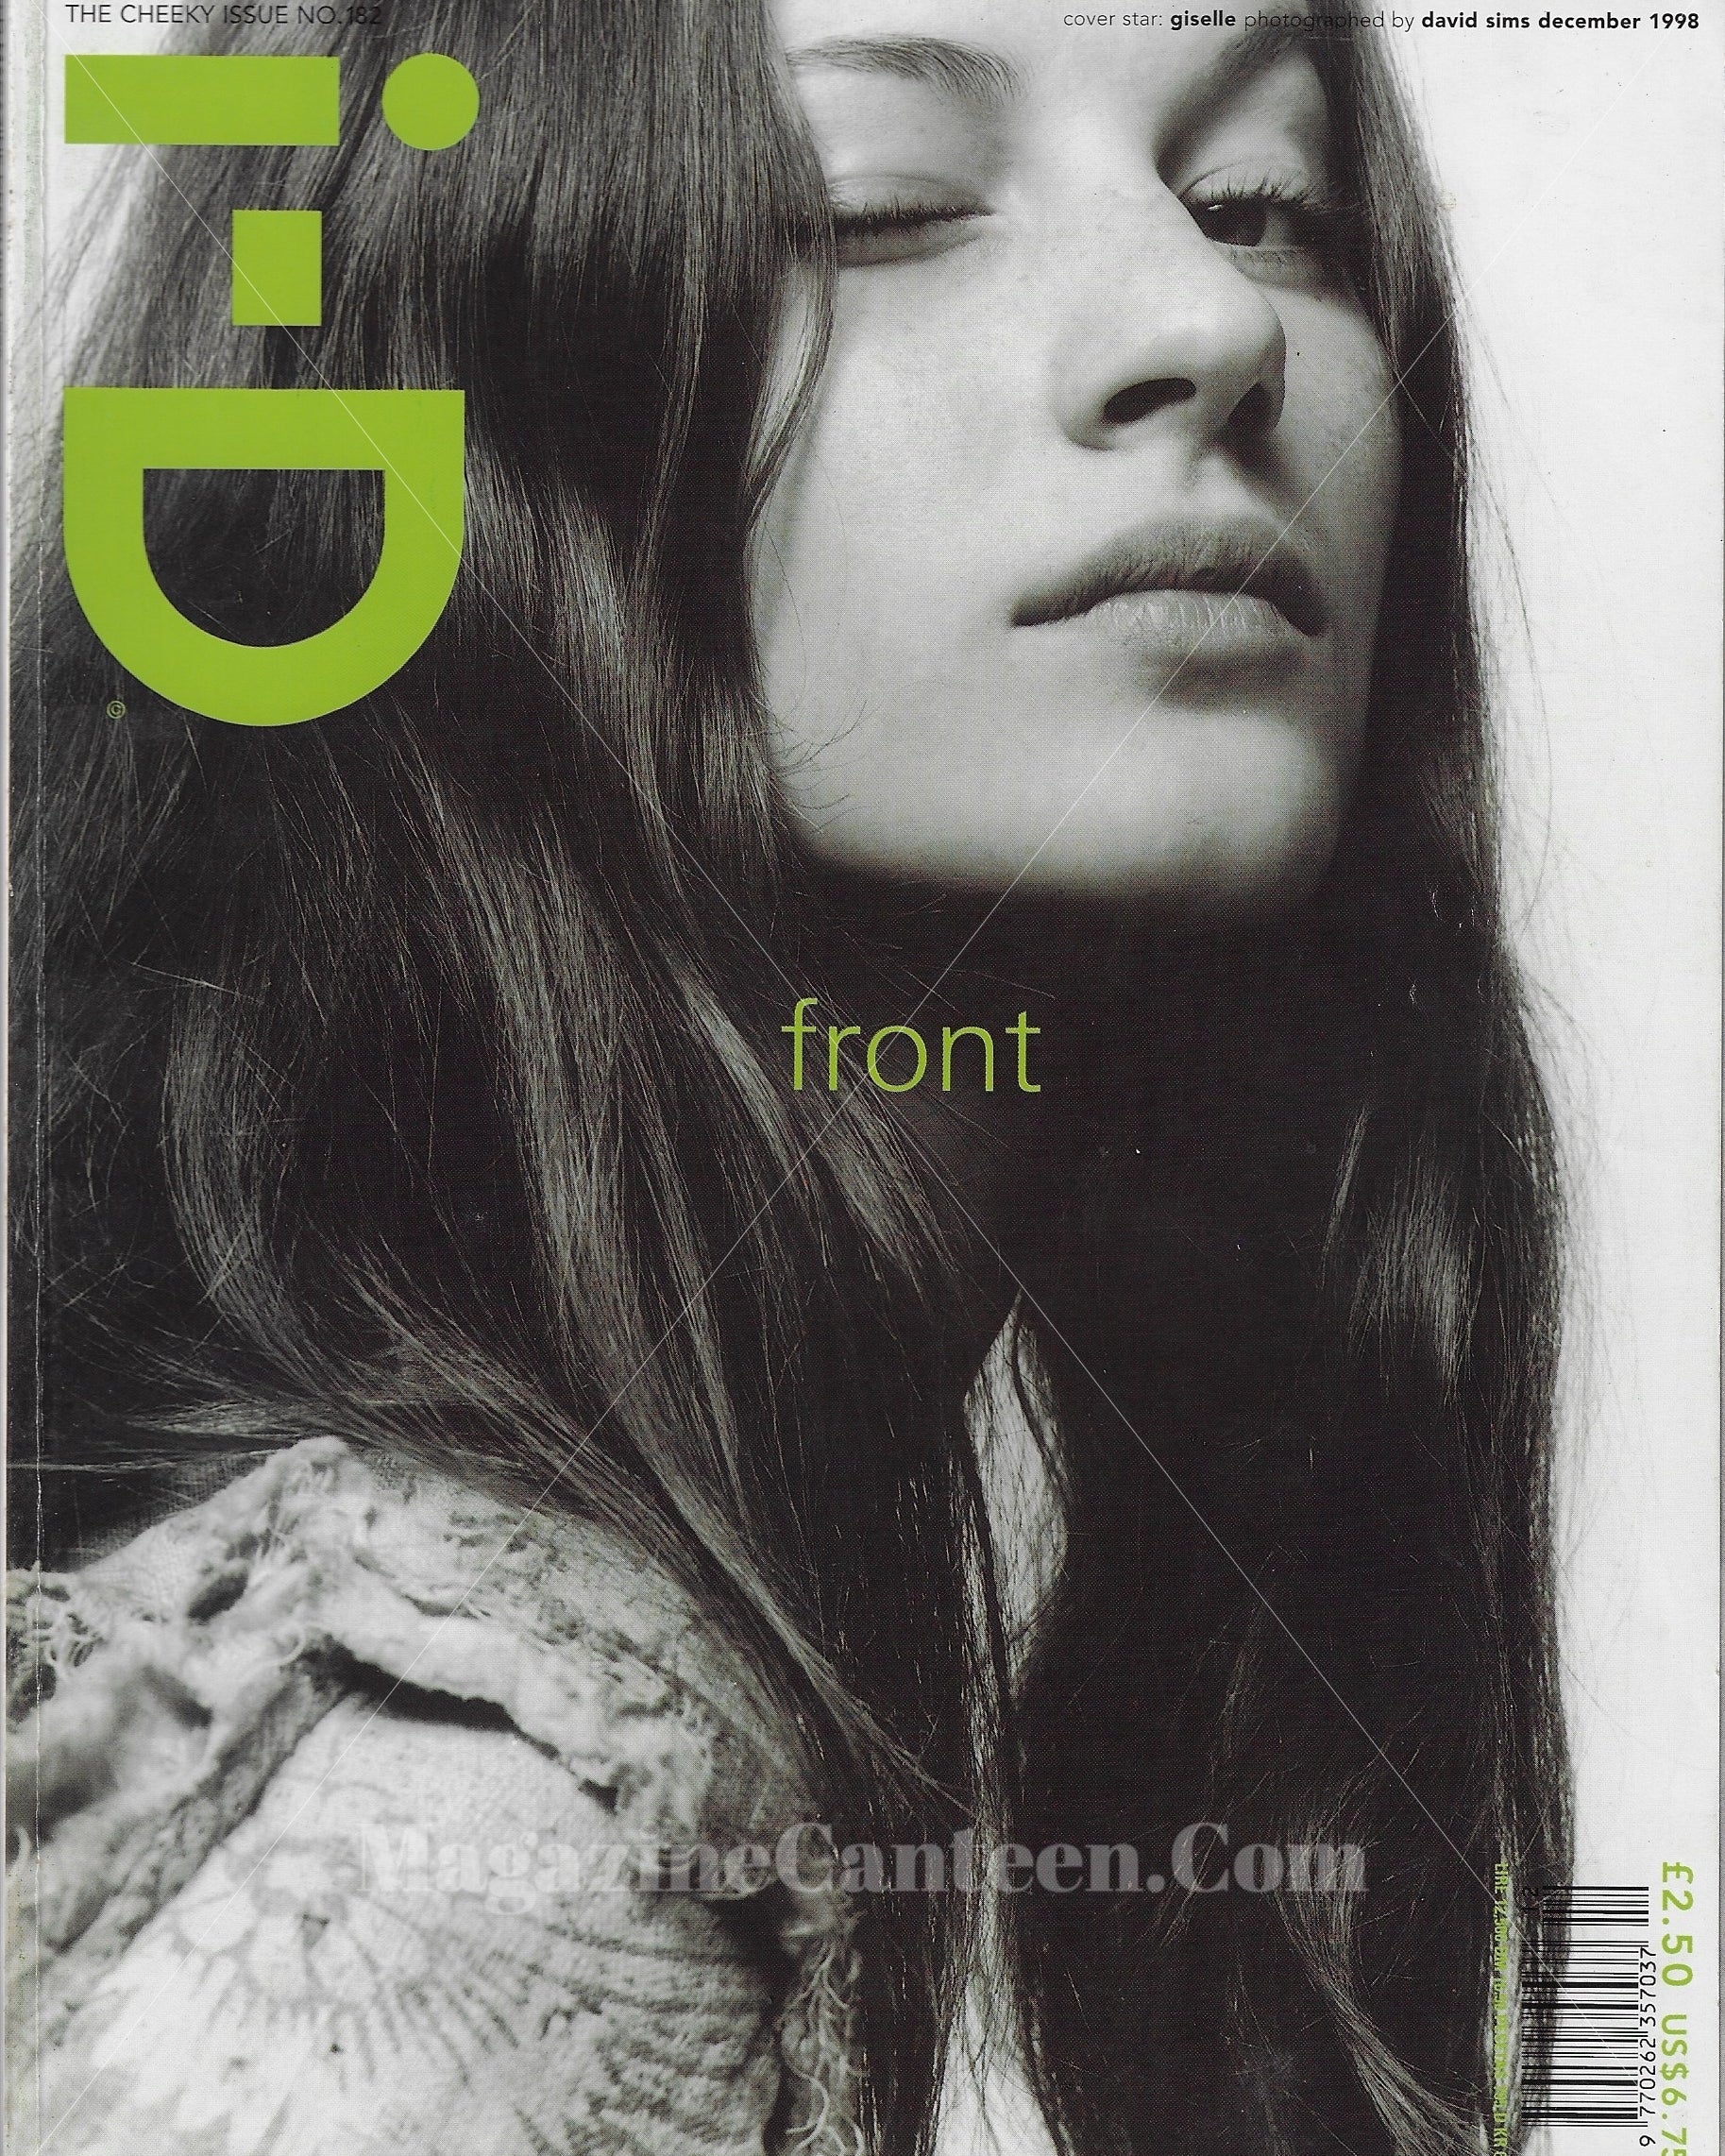 I-D Magazine 182 - Gisele Bundchen 1998 december first cover